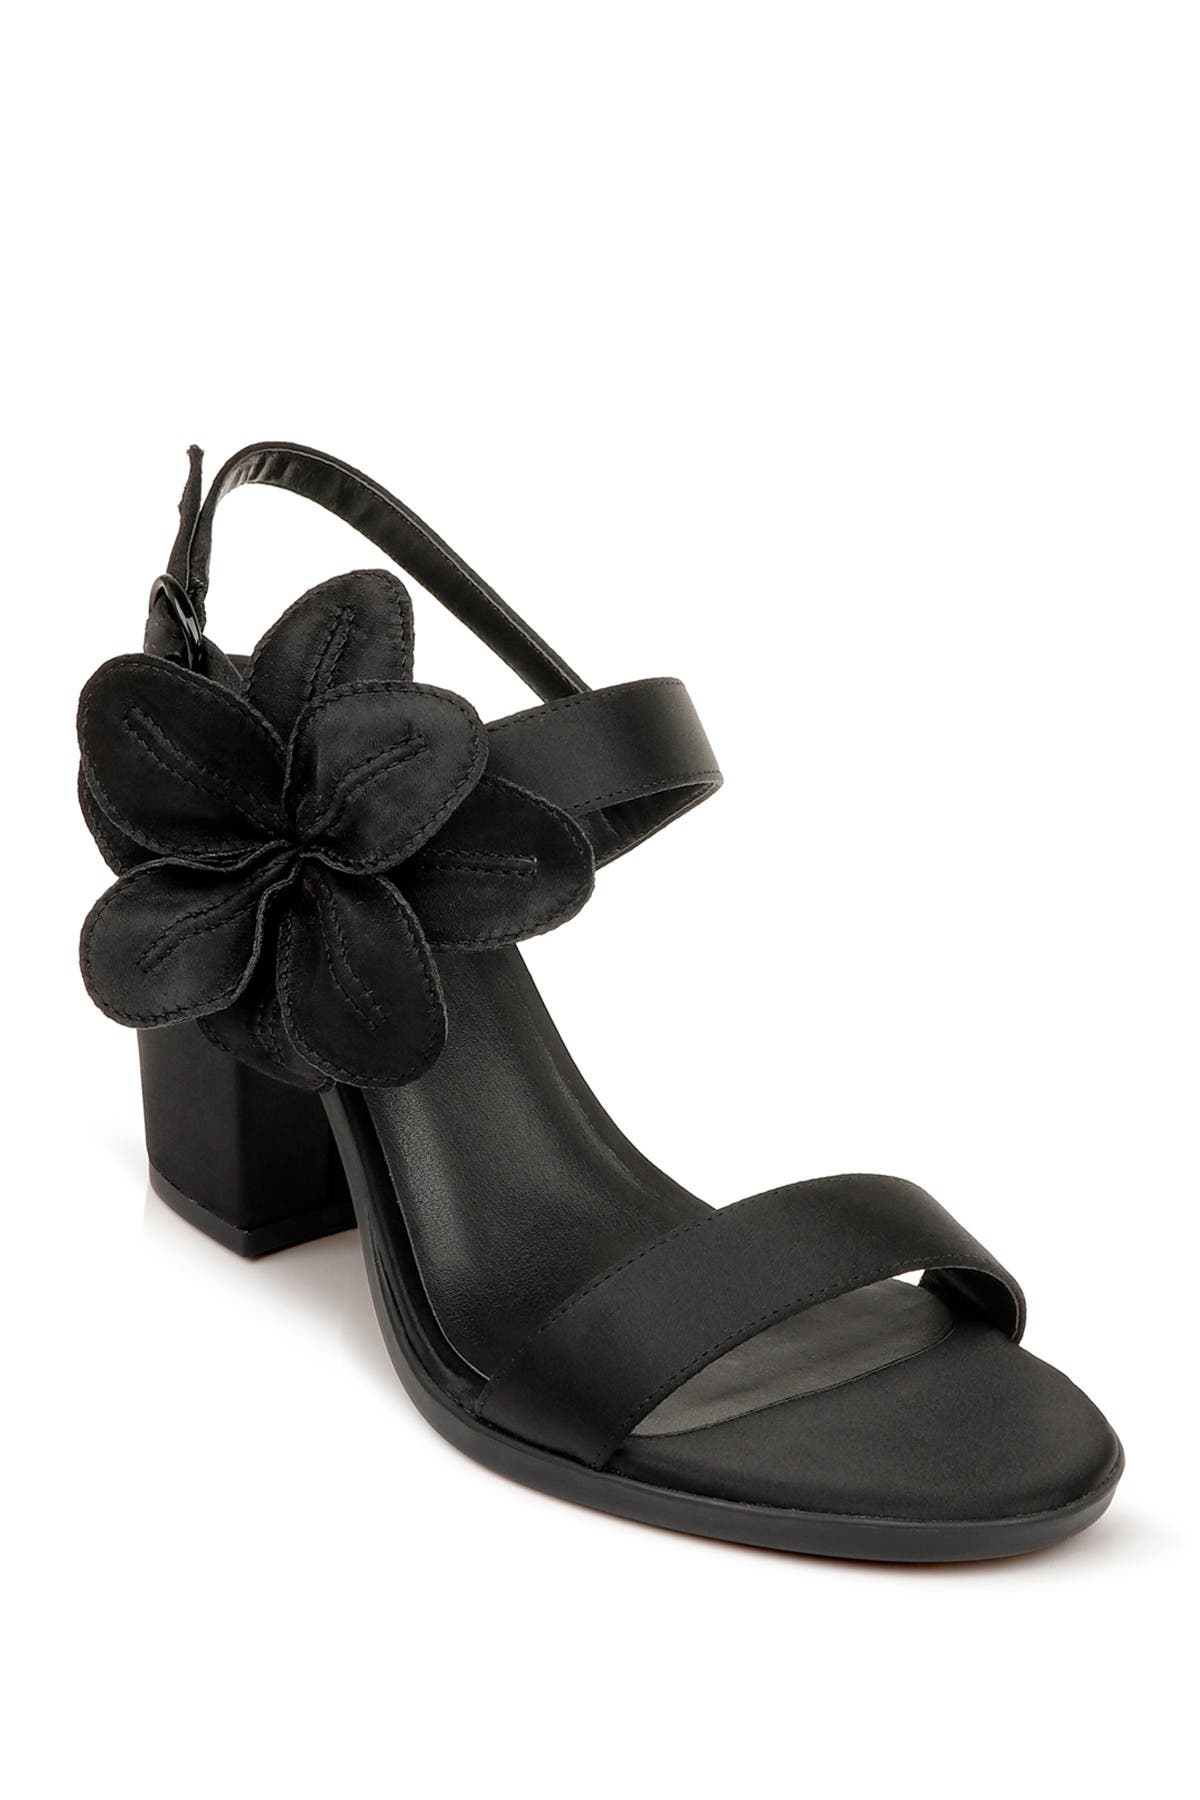 nordstrom black strappy heels